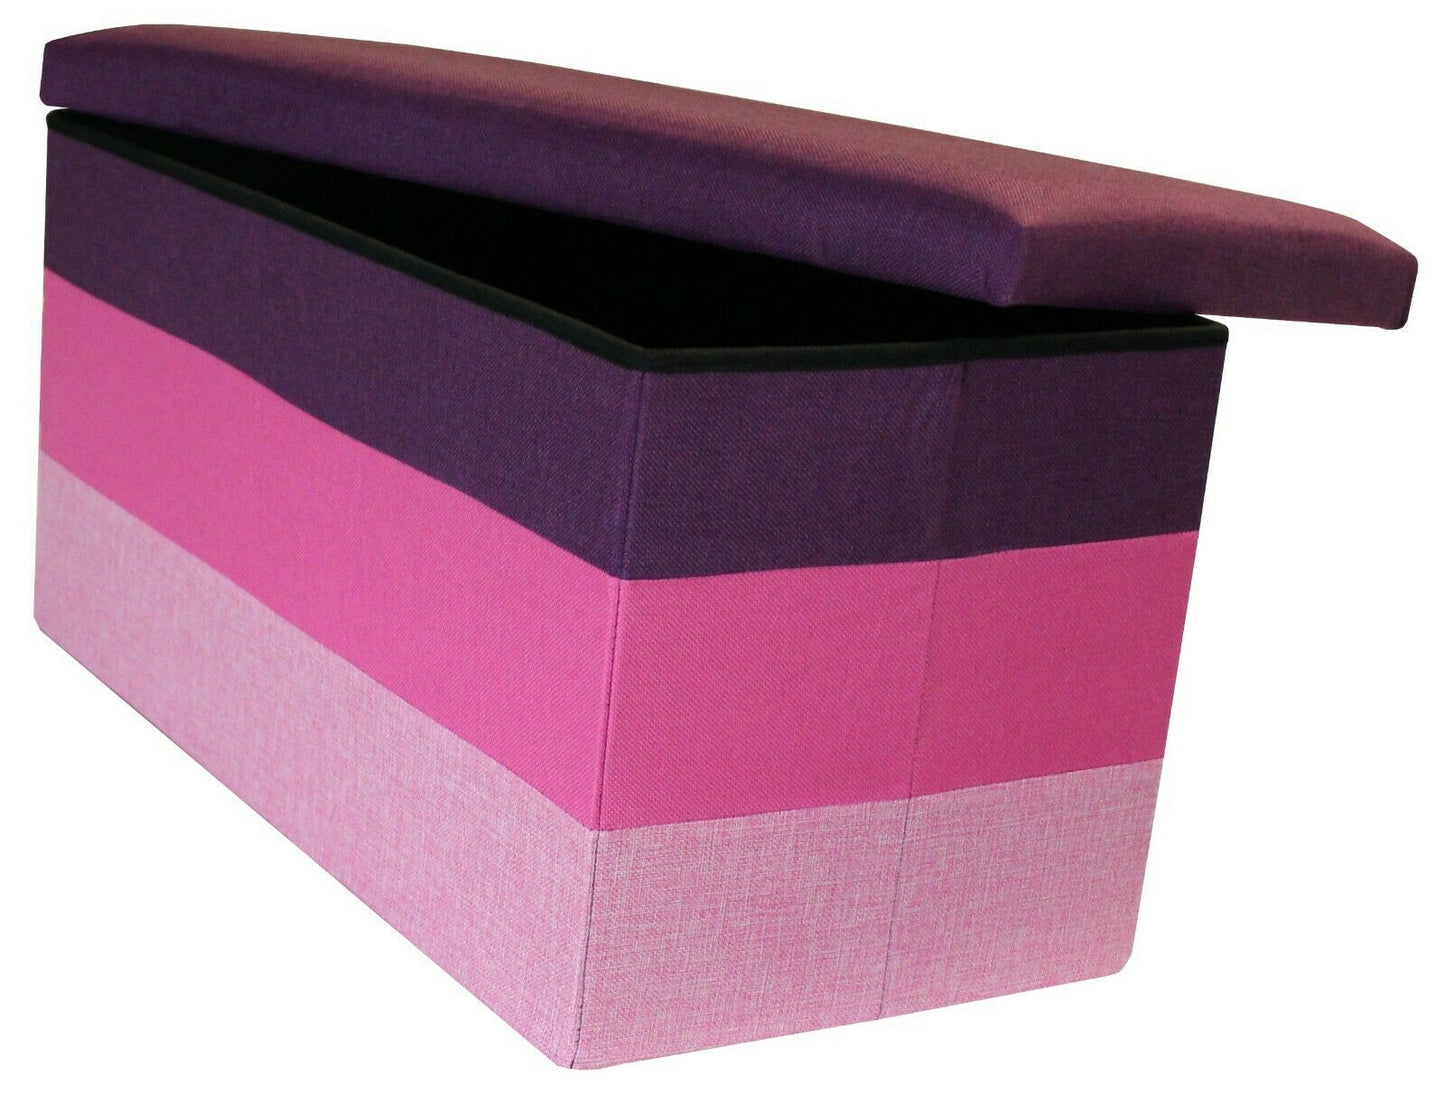 Large Linear Storage Ottoman Purple Pink Three Tone Foot Stool Seat Storage Box